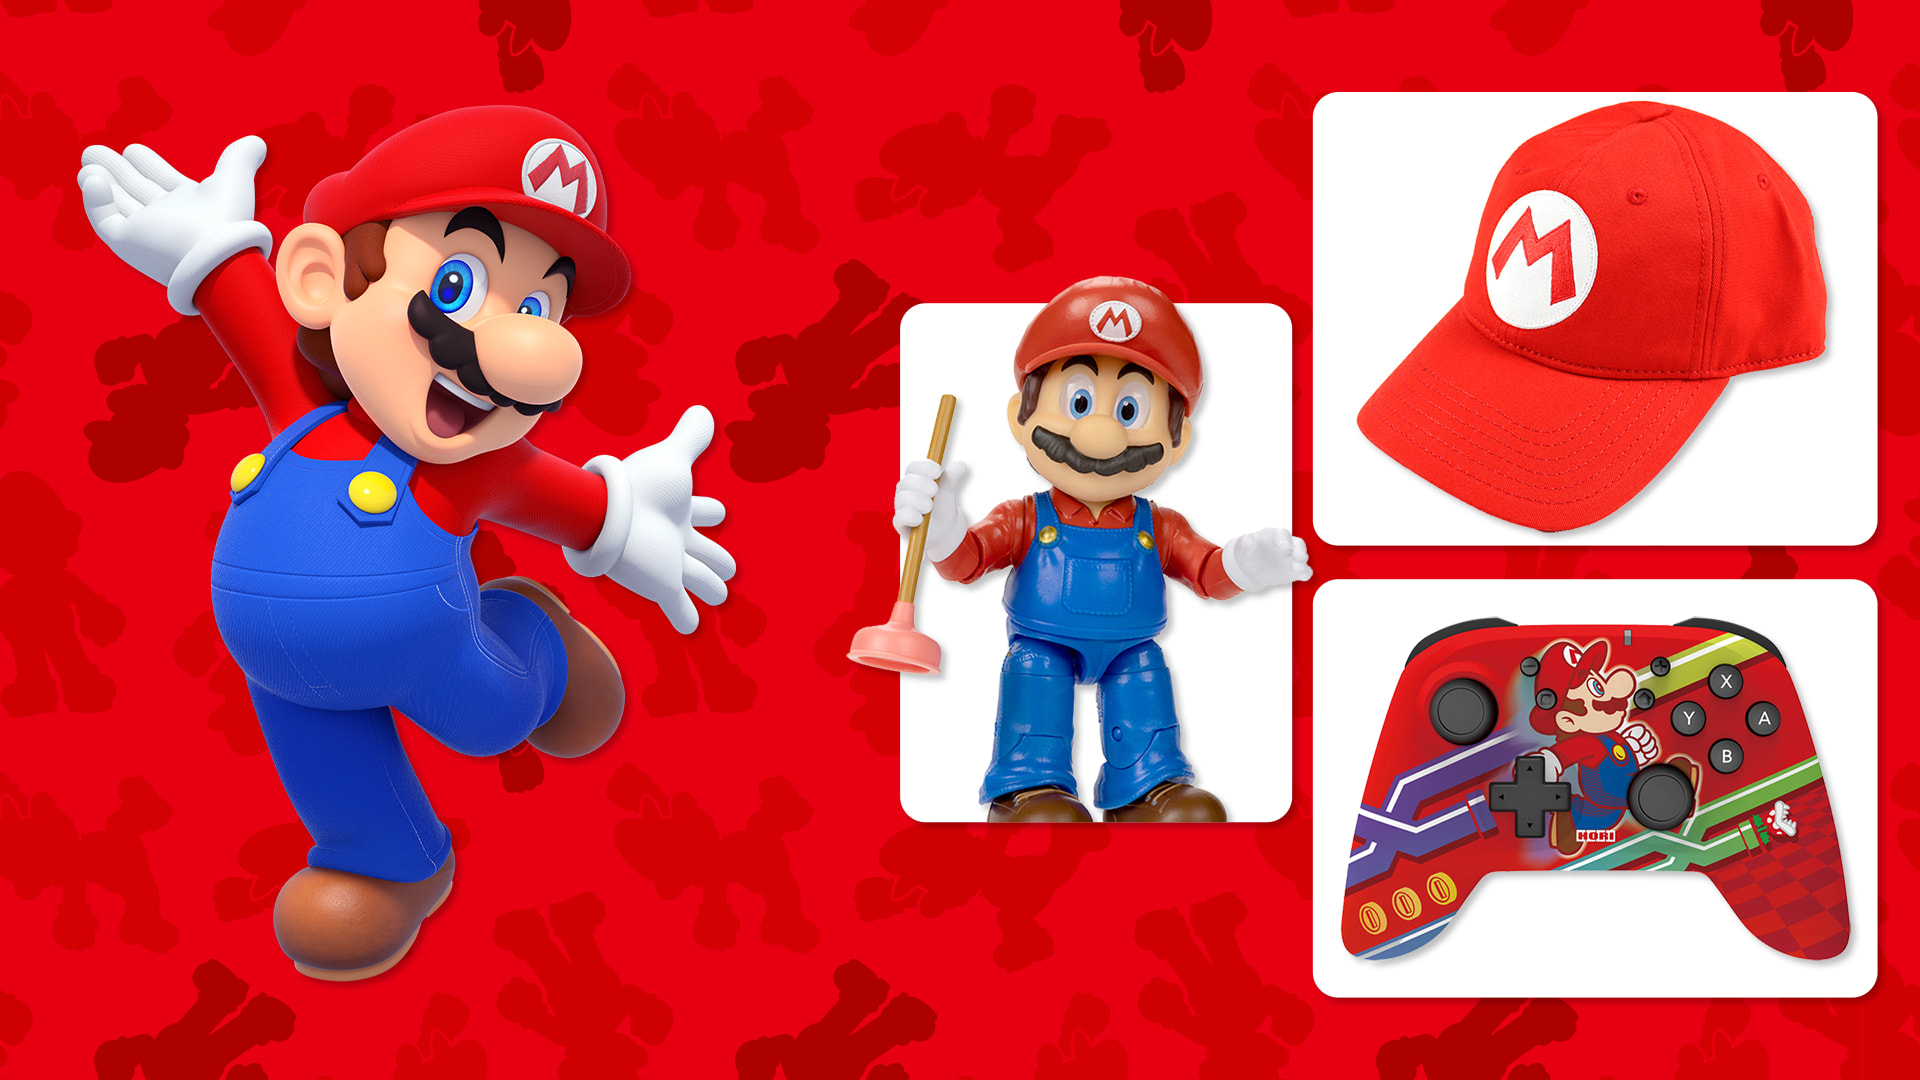 Mario posing and Mario merchandise